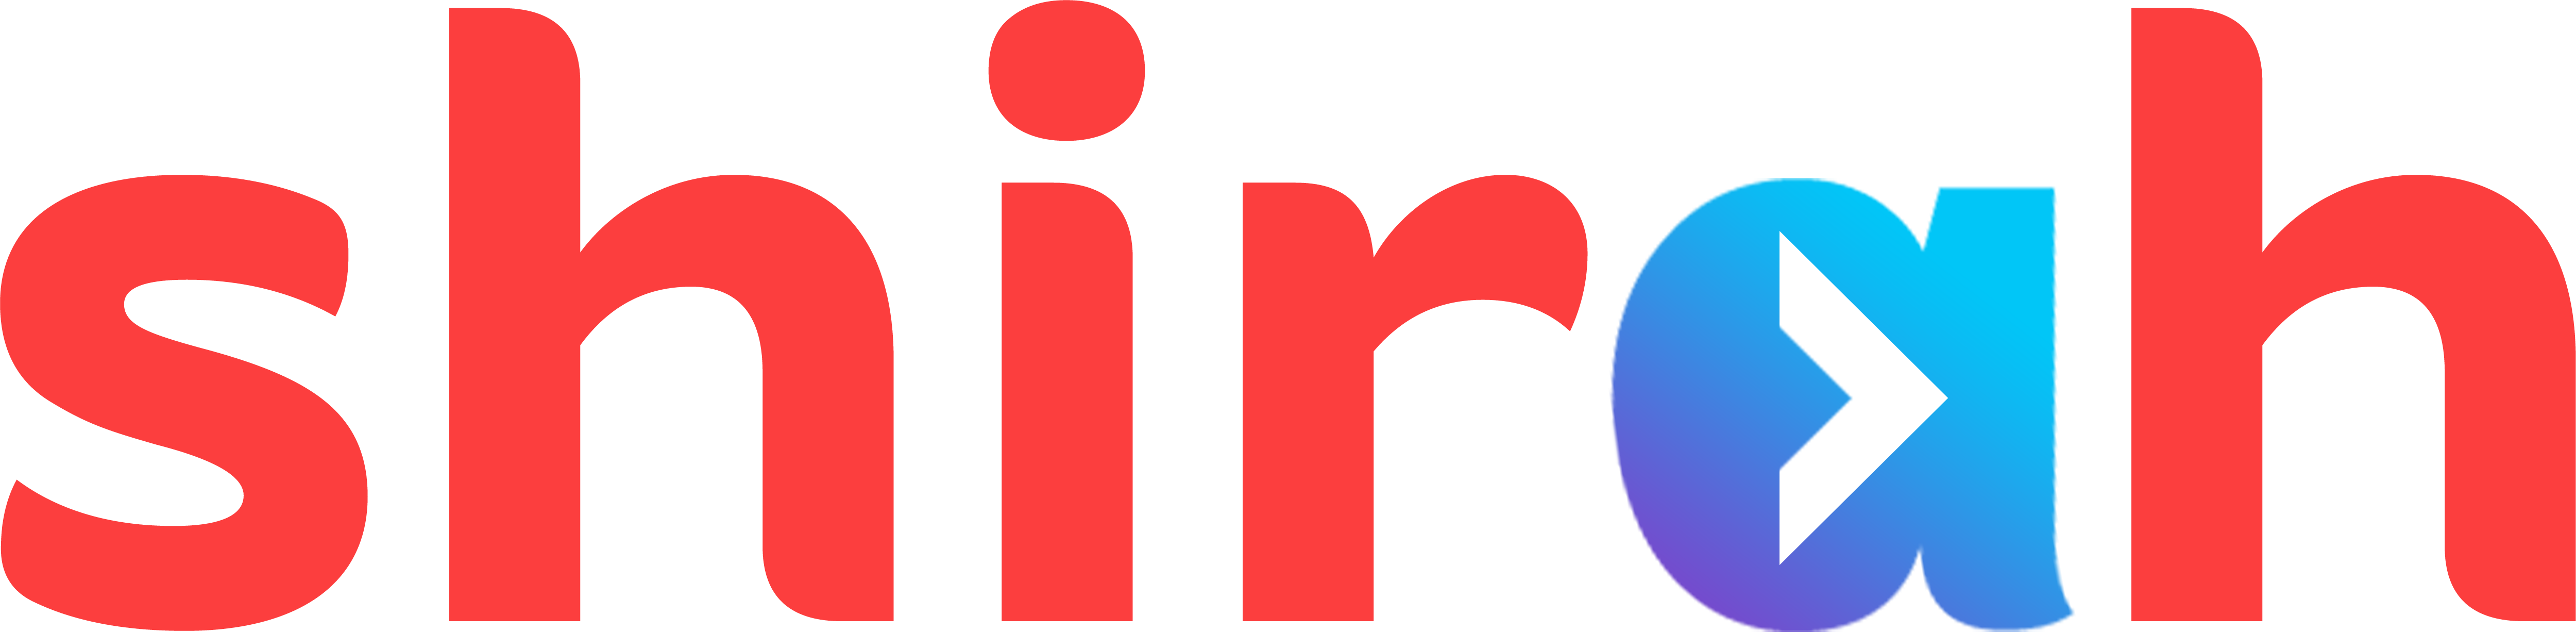 shirah-logo